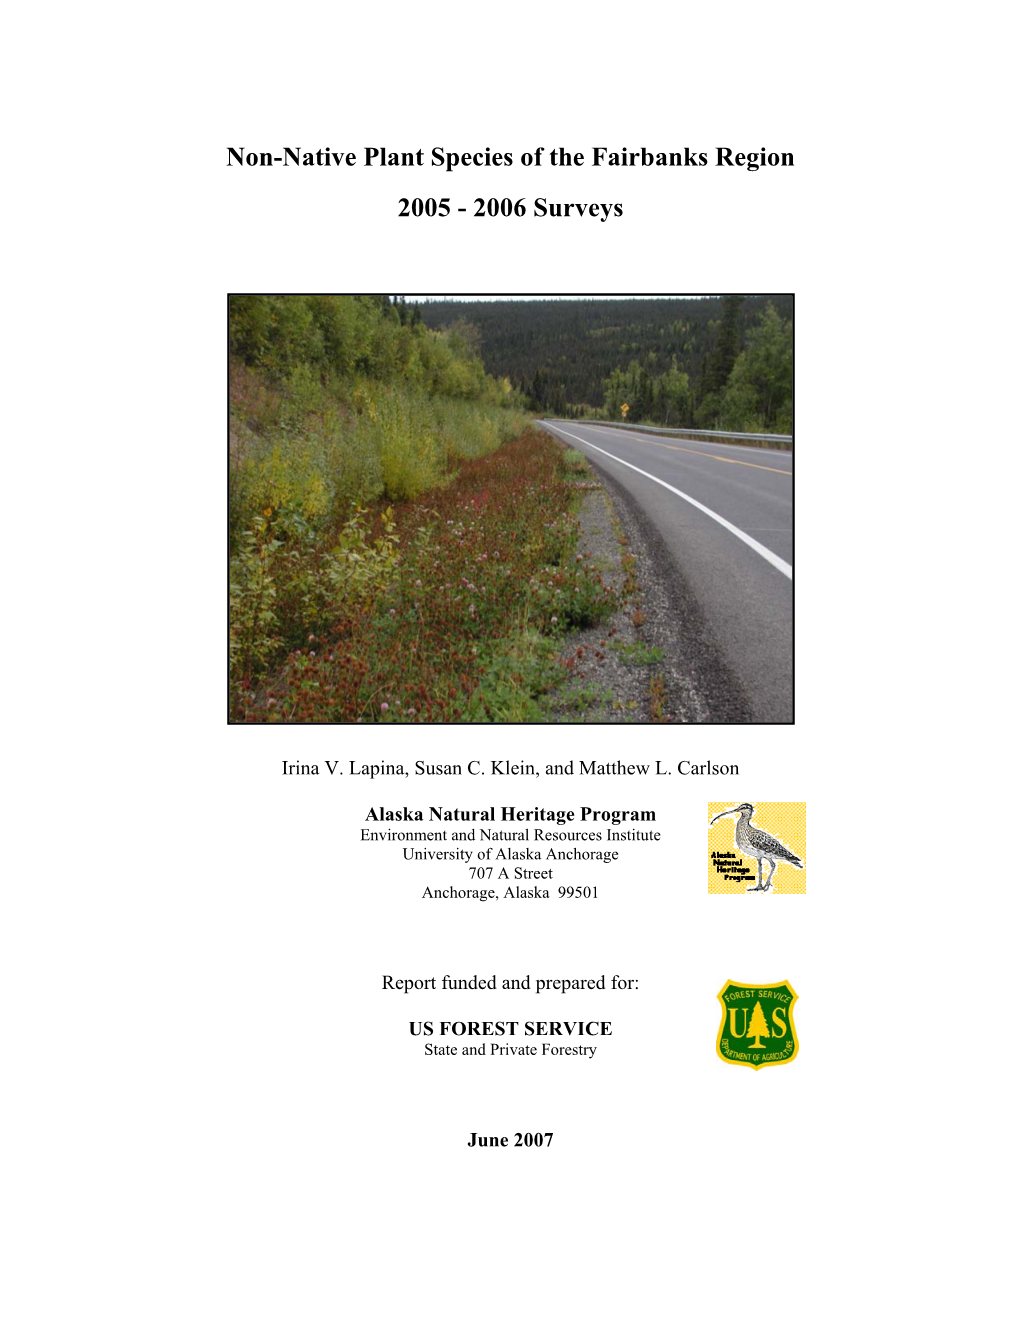 Non-Native Plant Species of the Fairbanks Region 2005 - 2006 Surveys